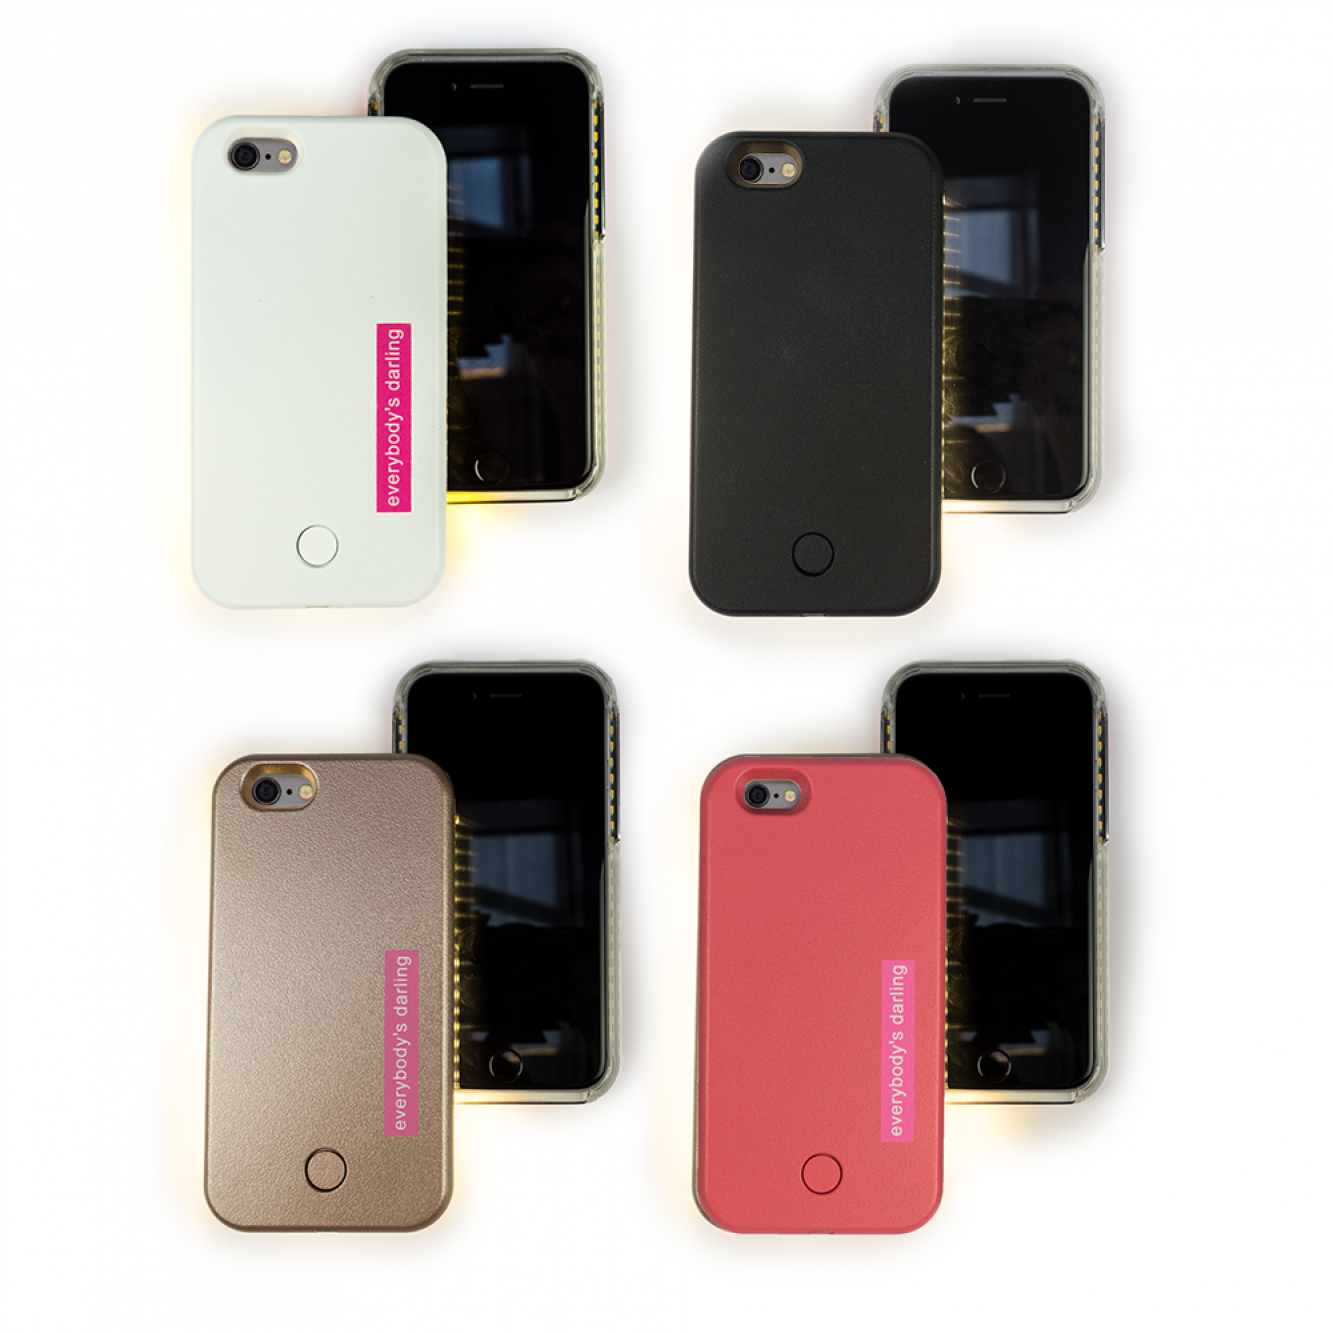 LED Selfie Hülle für iPhone 6 / 6s Plus | Protection Case mit SOS Licht | pink